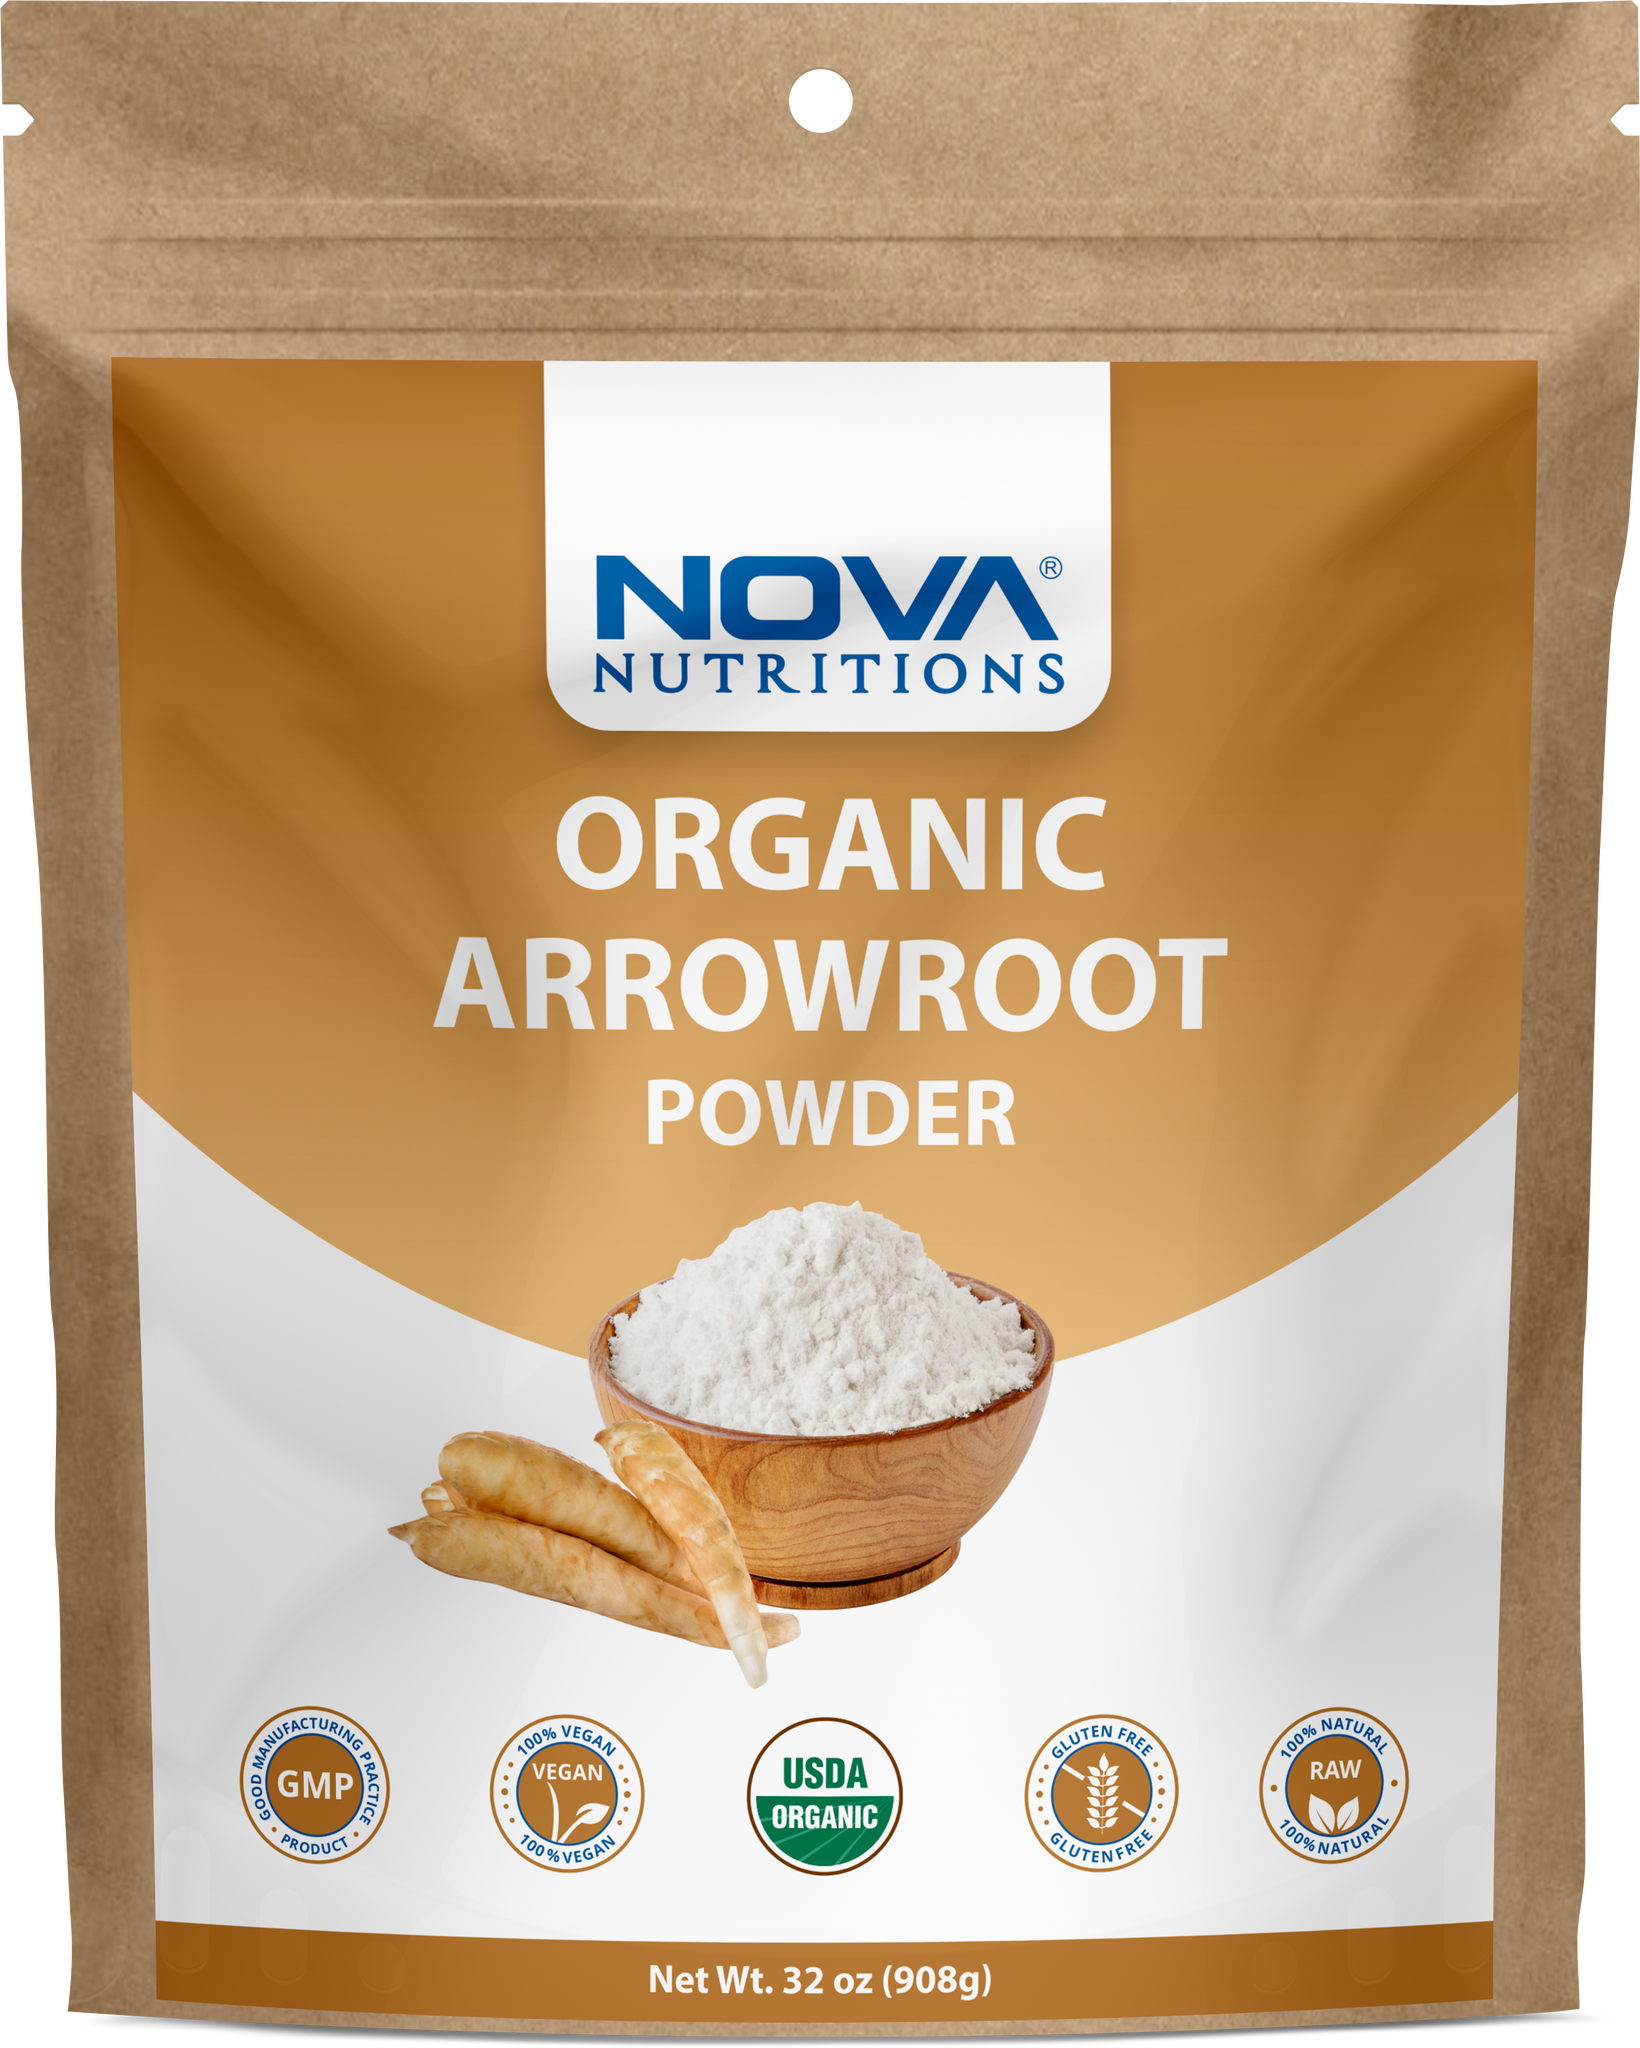 Organic Arrowroot Powder - Spicely Organics